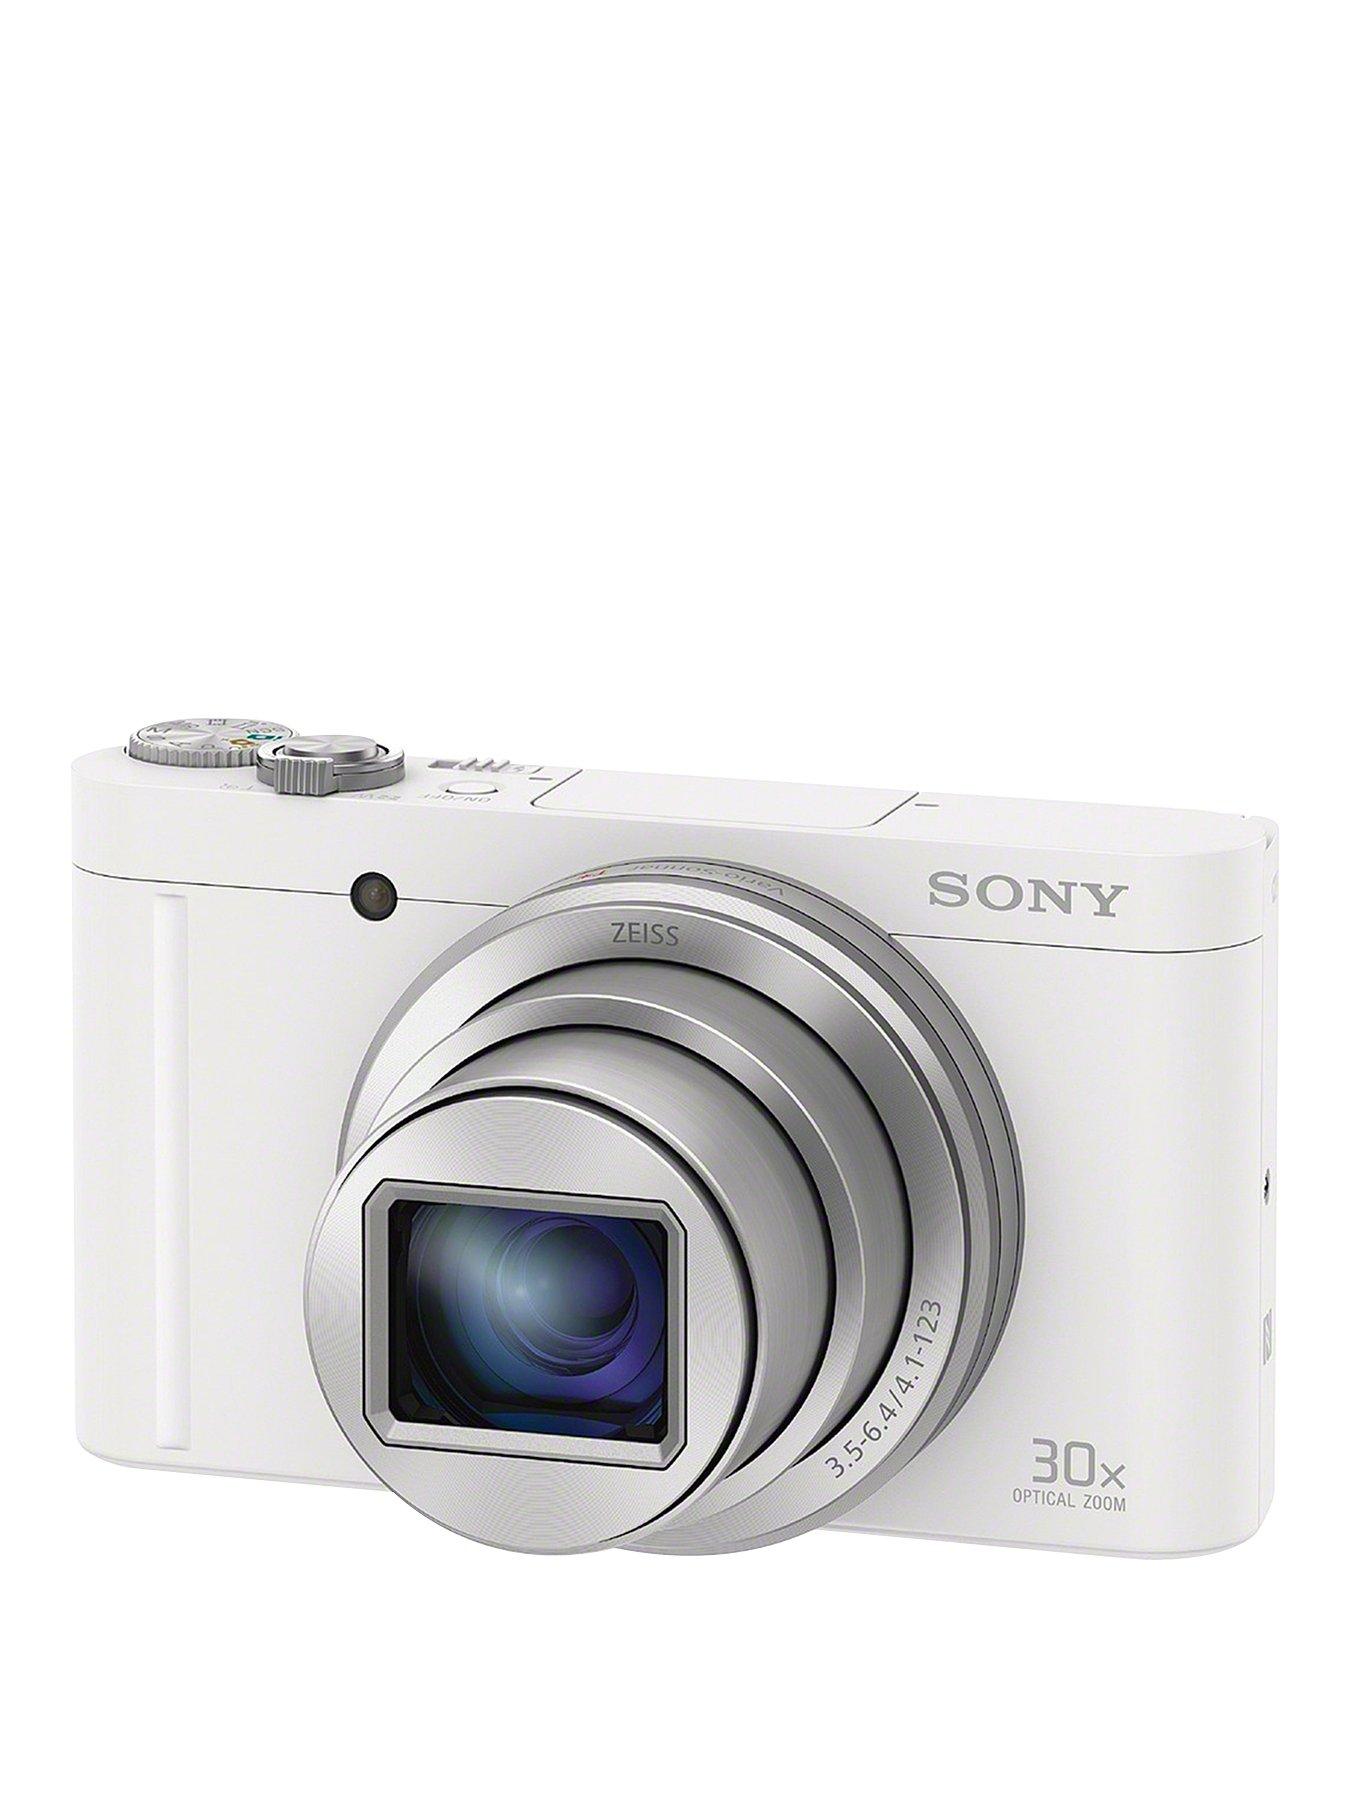 Sony Dsc Wx500 Cybershot 18.2 Mp 30X Zoom Digital Compact Camera With Selfie Screen – White